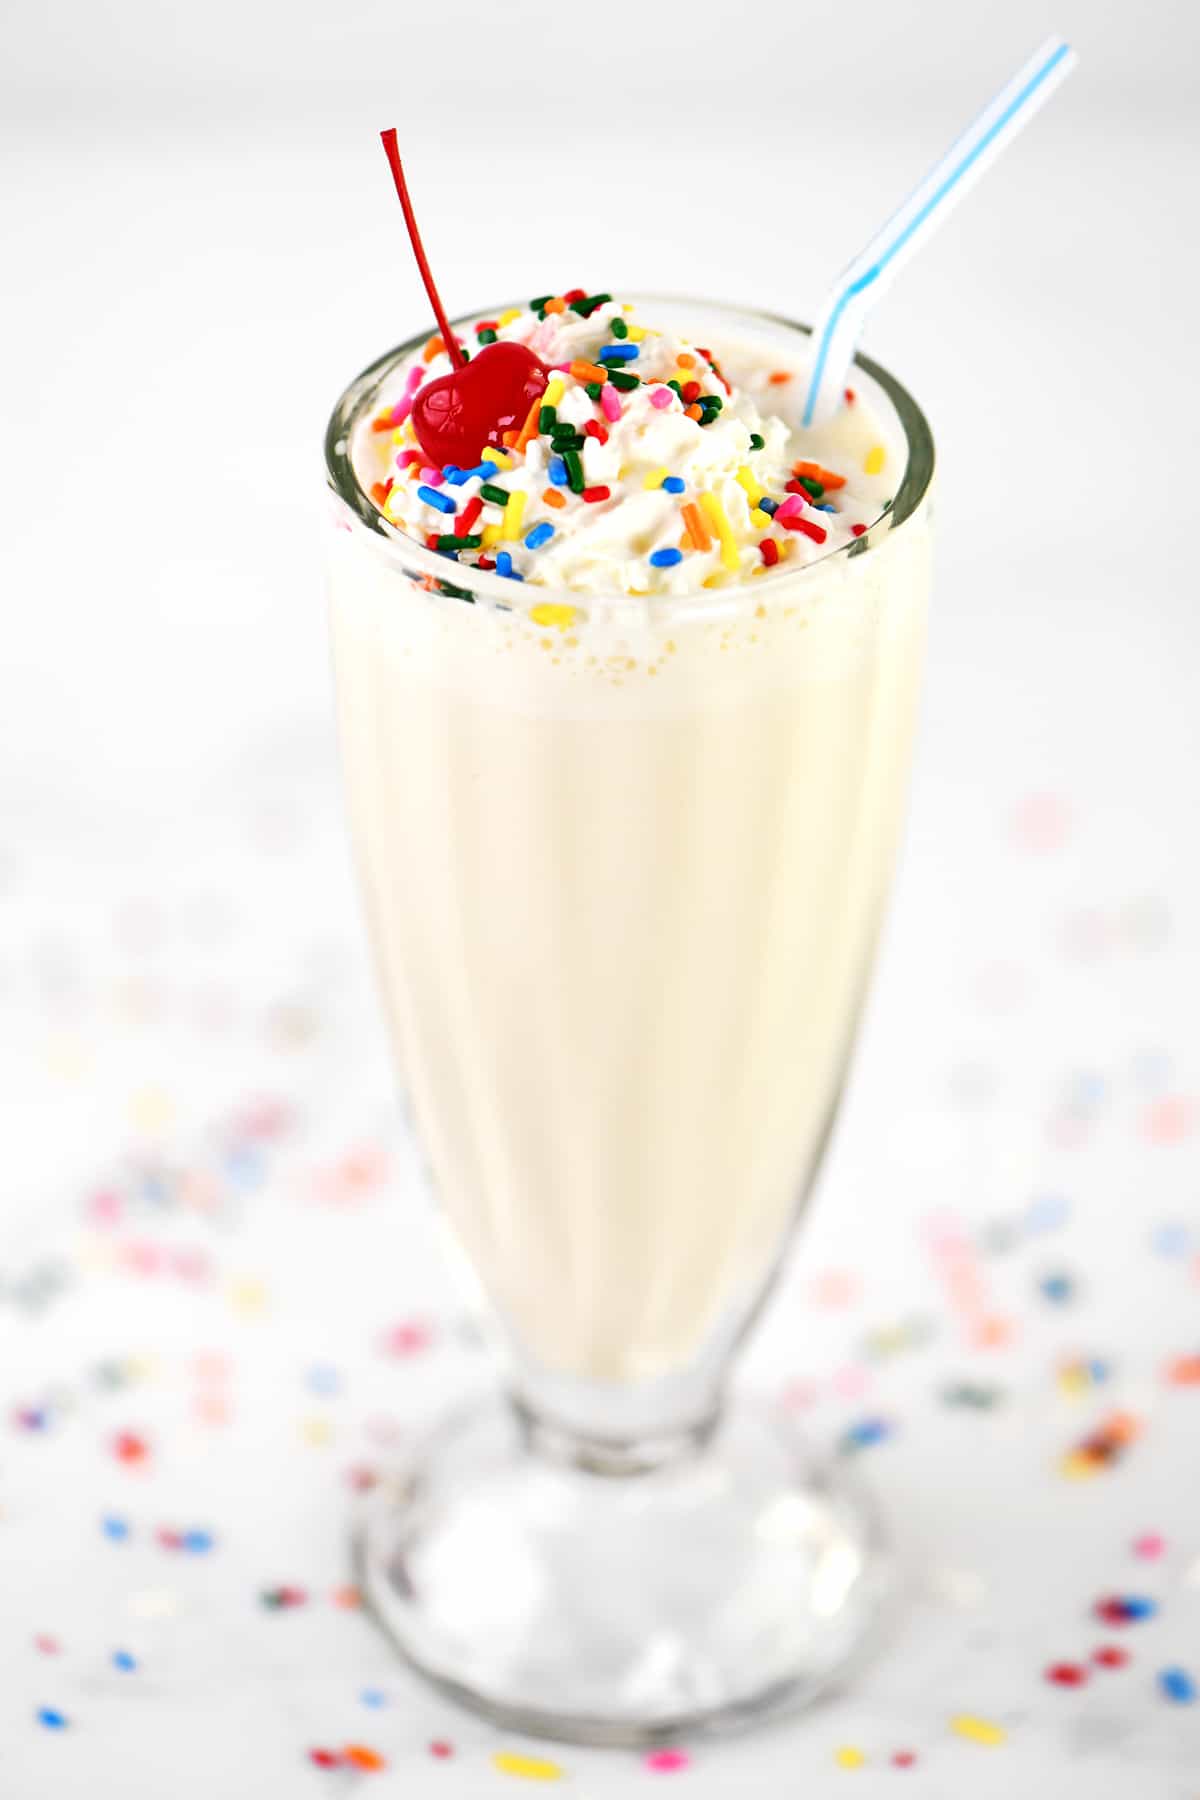 A malt glass with a vanilla milkshake inside.